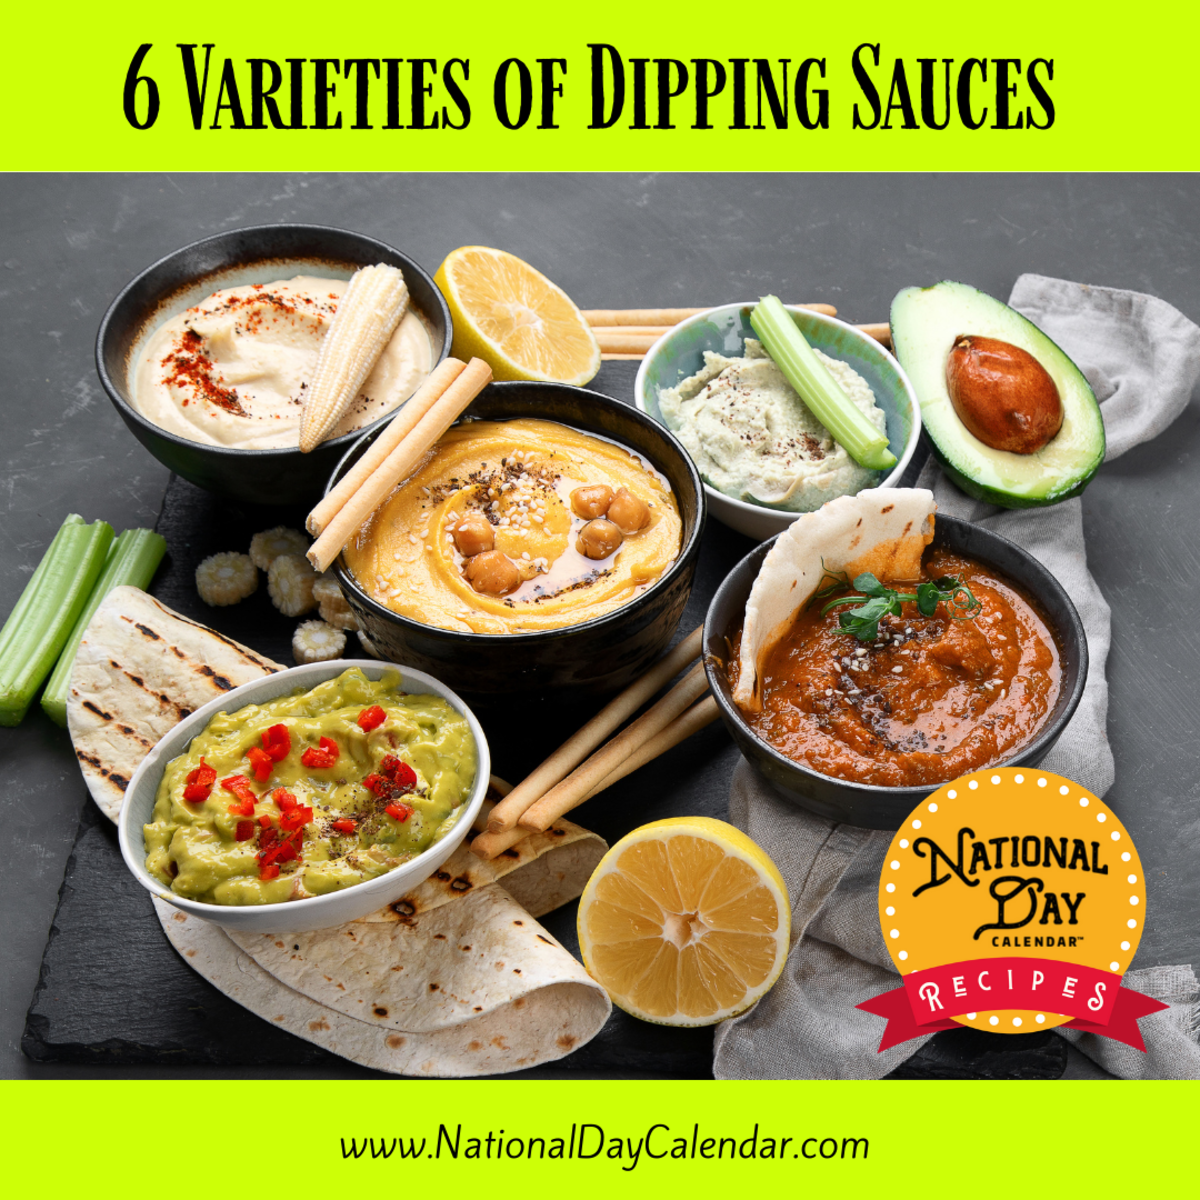 6 Varieties of Dipping Sauces